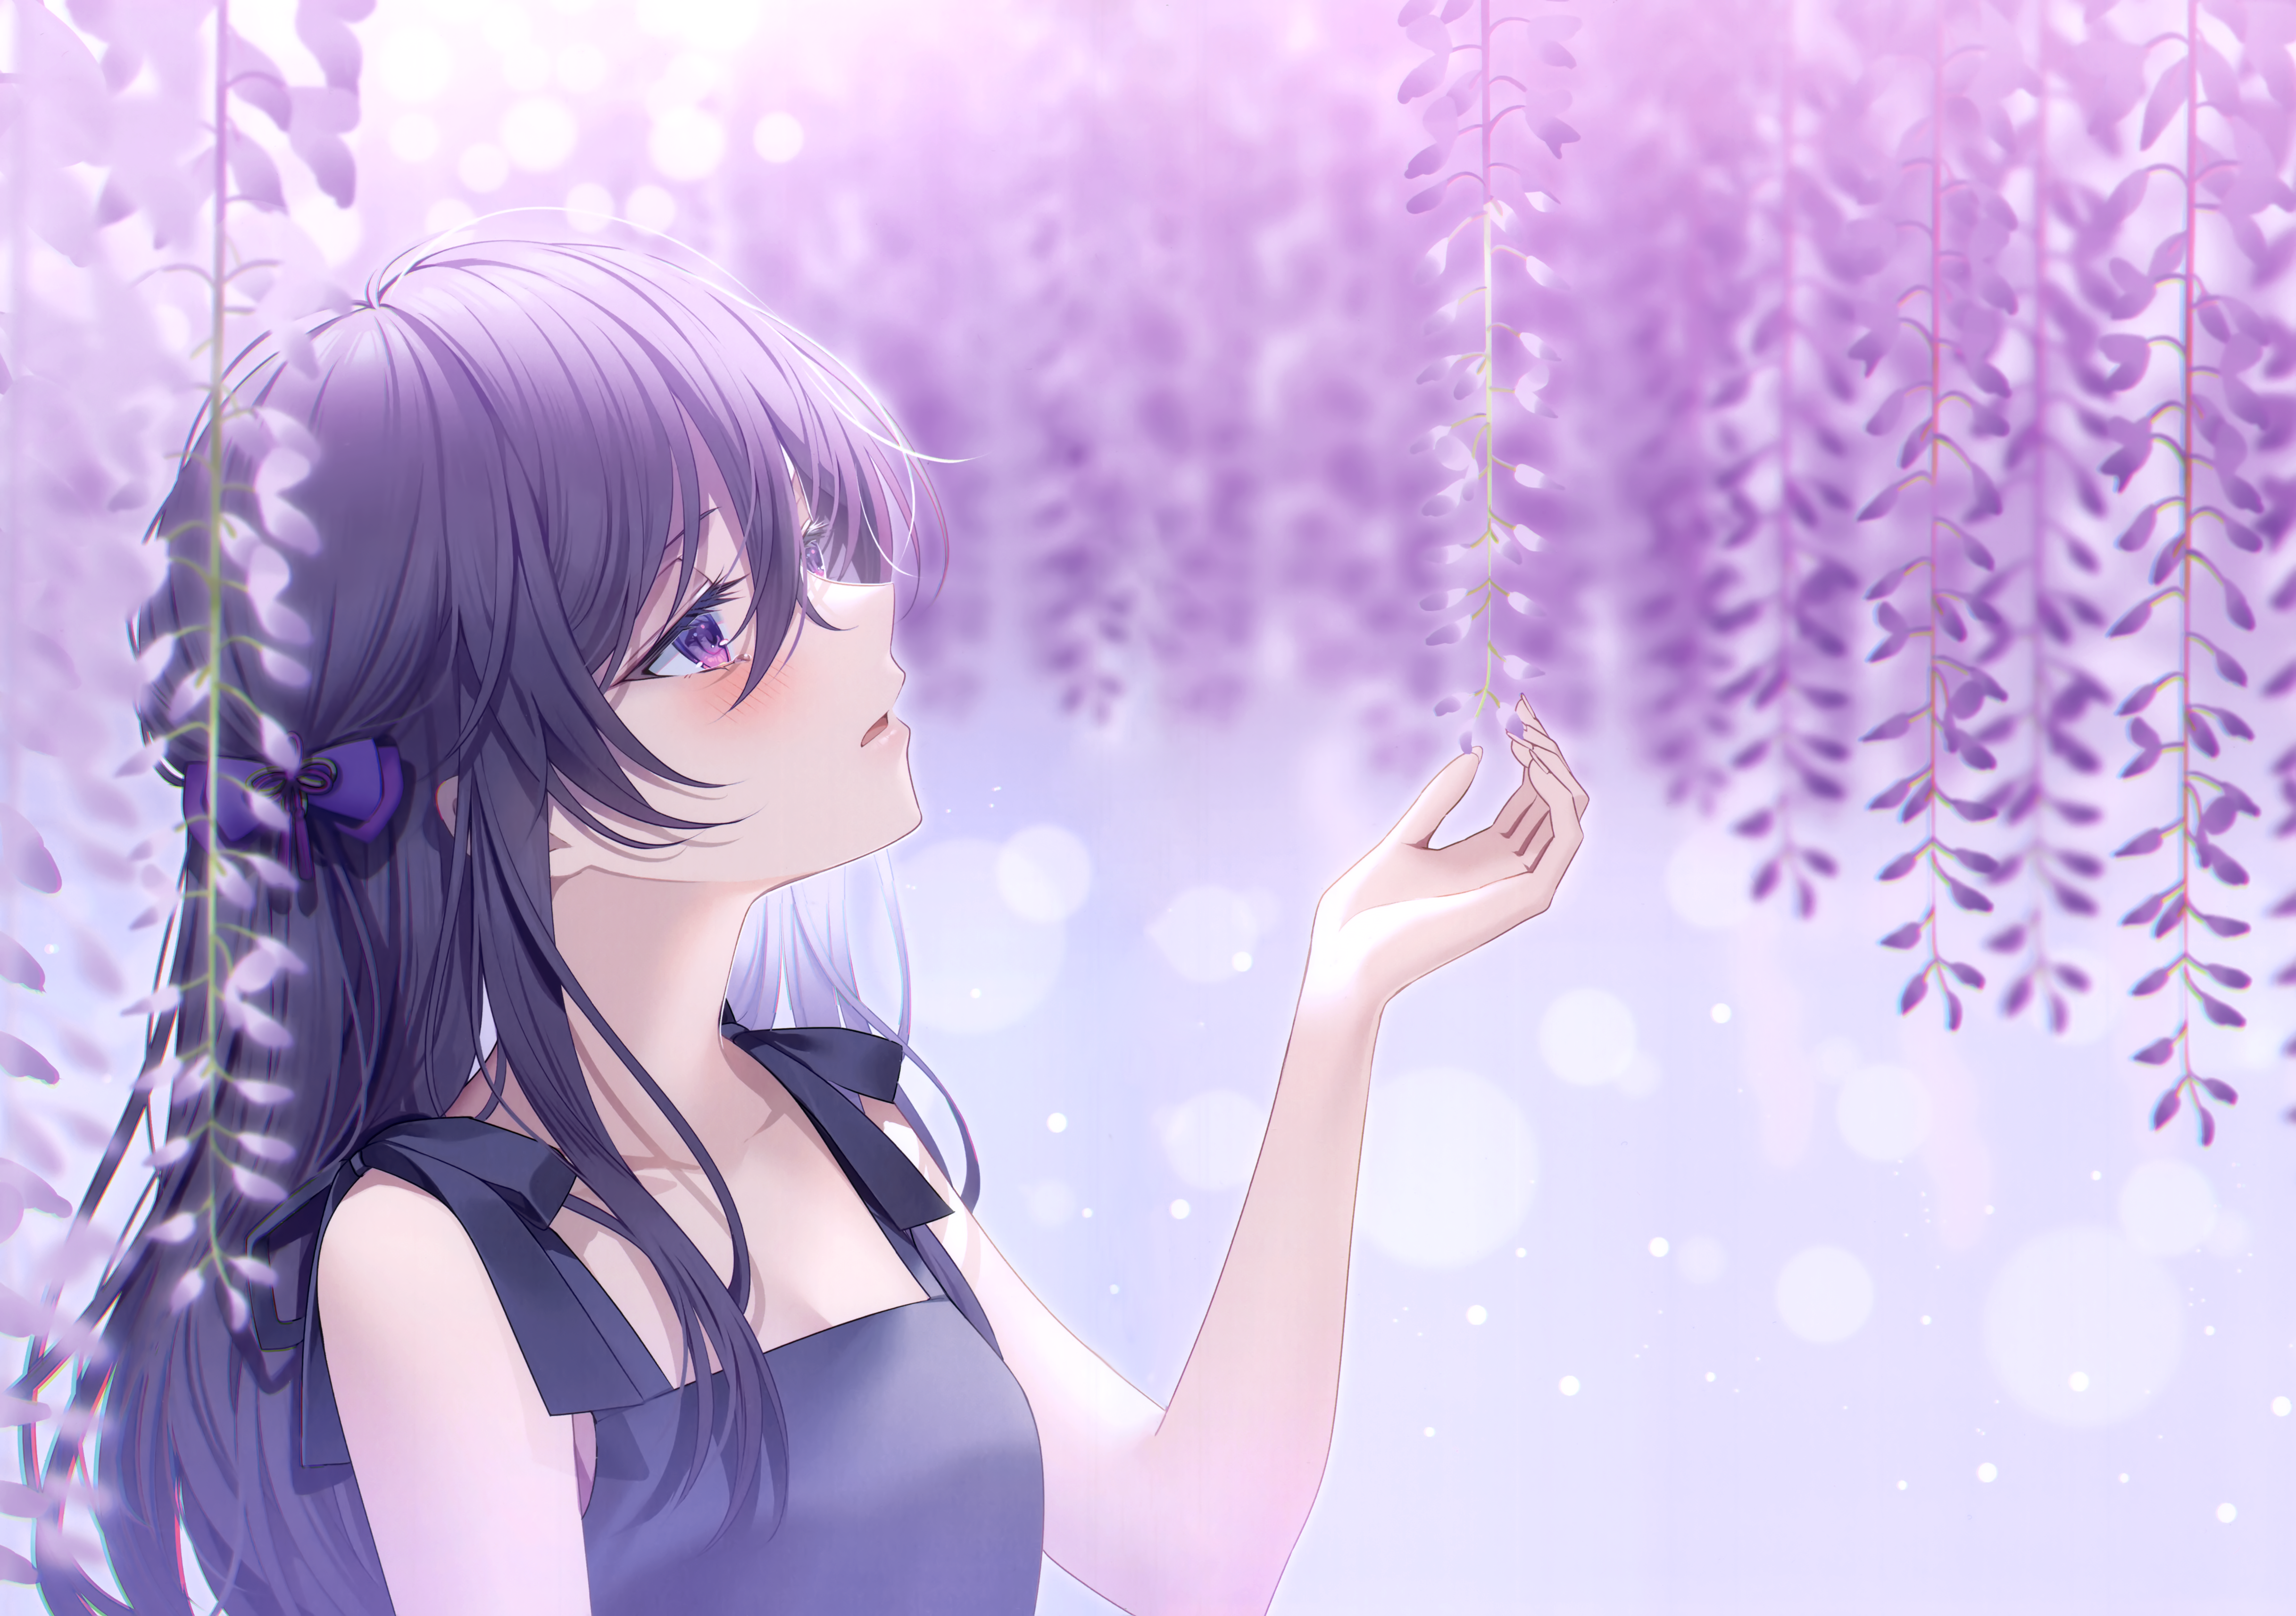 Anime 4868x3426 anime Pixiv anime girls flowers purple hair purple eyes blushing looking away bow tie long hair